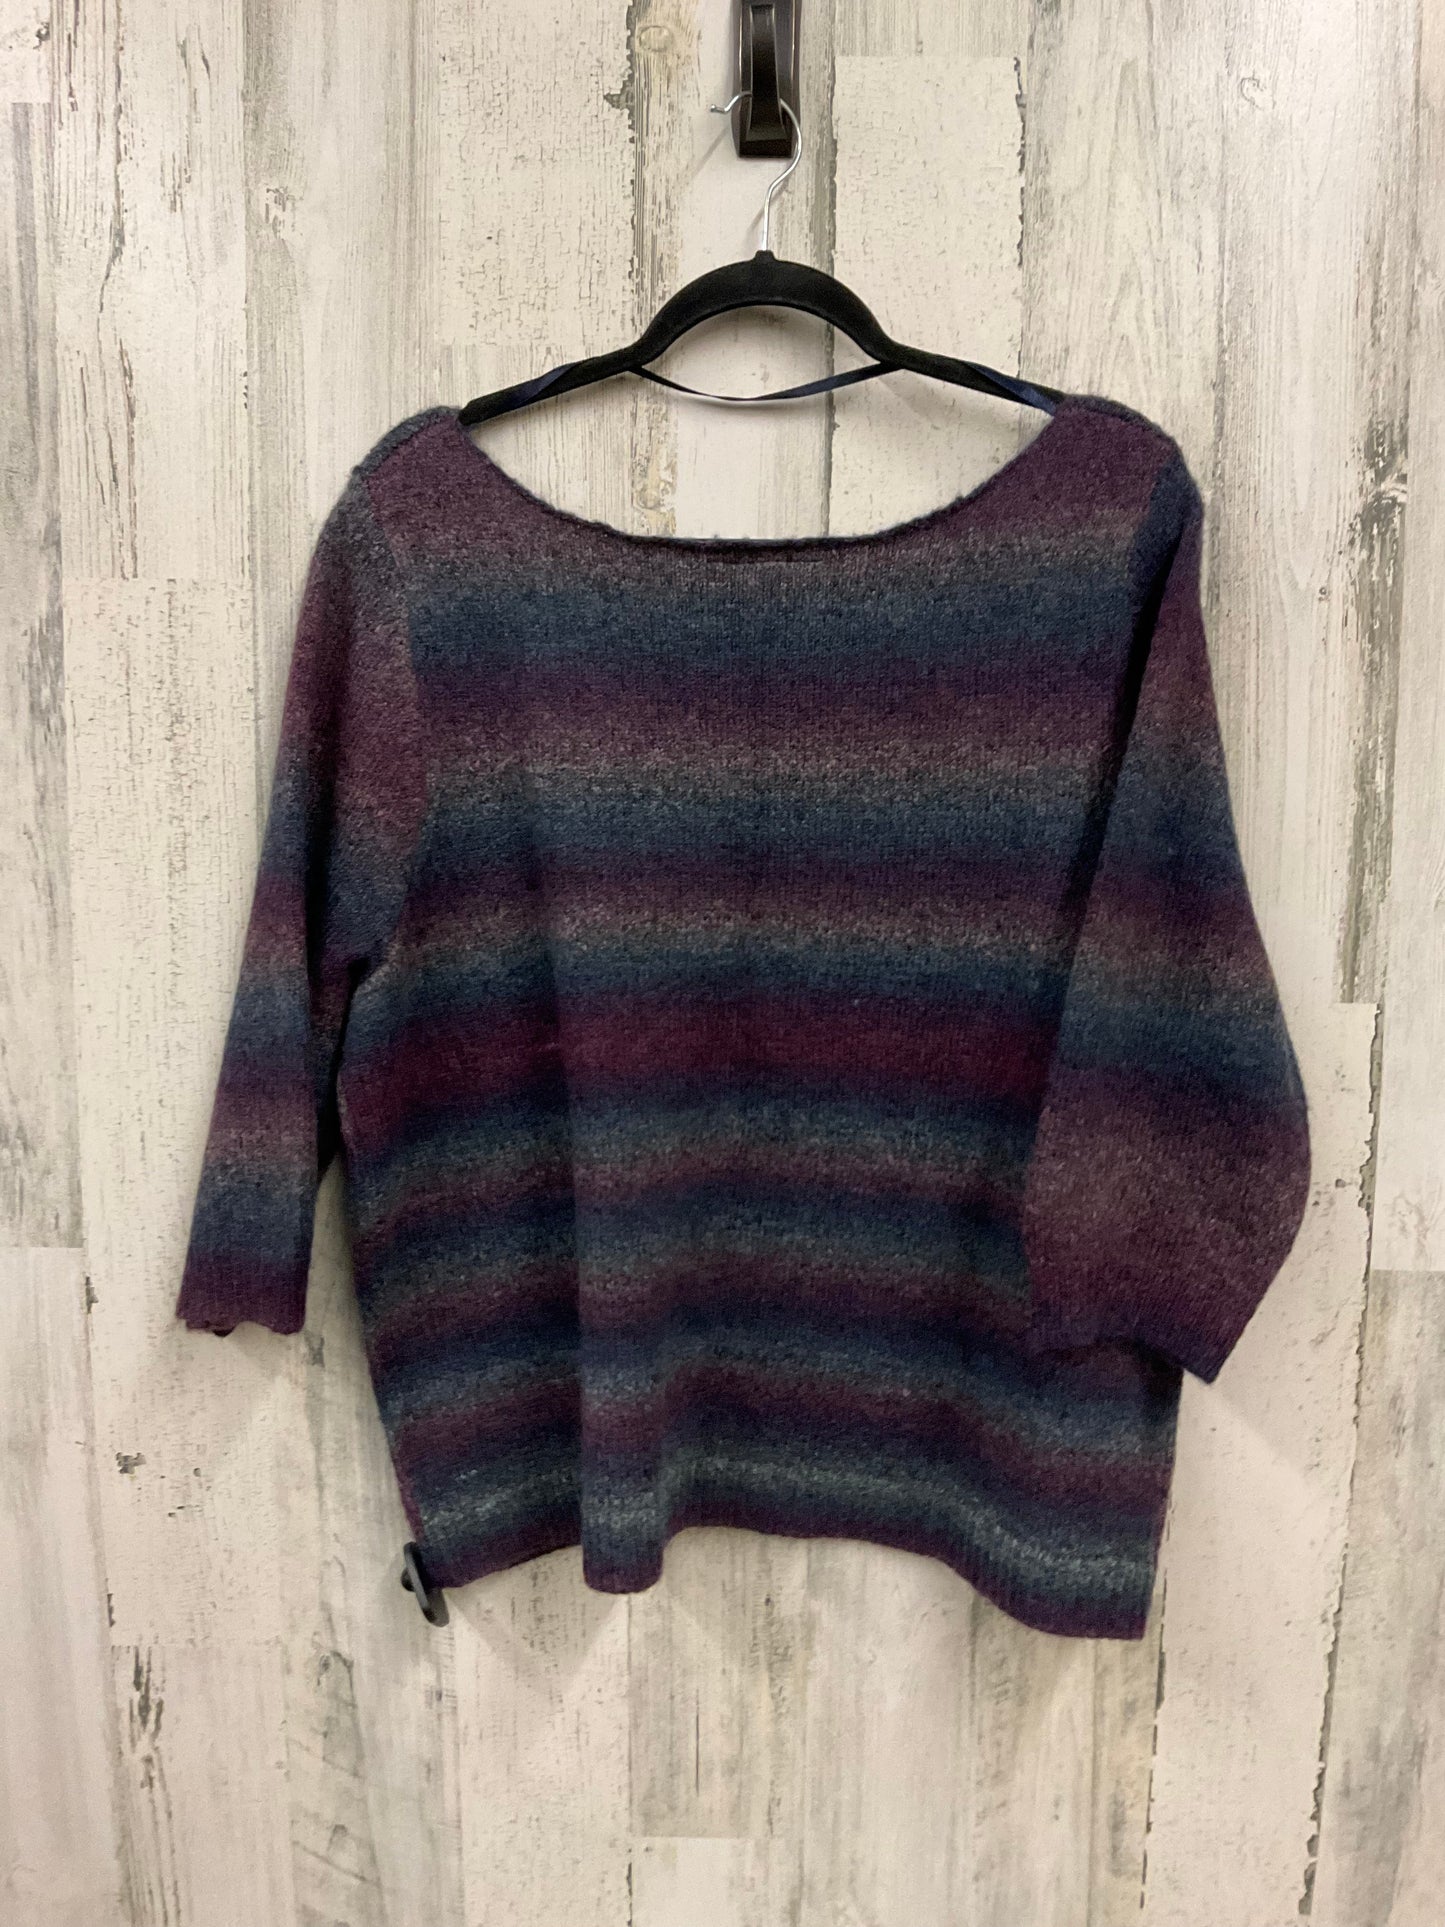 Sweater By Lane Bryant  Size: 1x